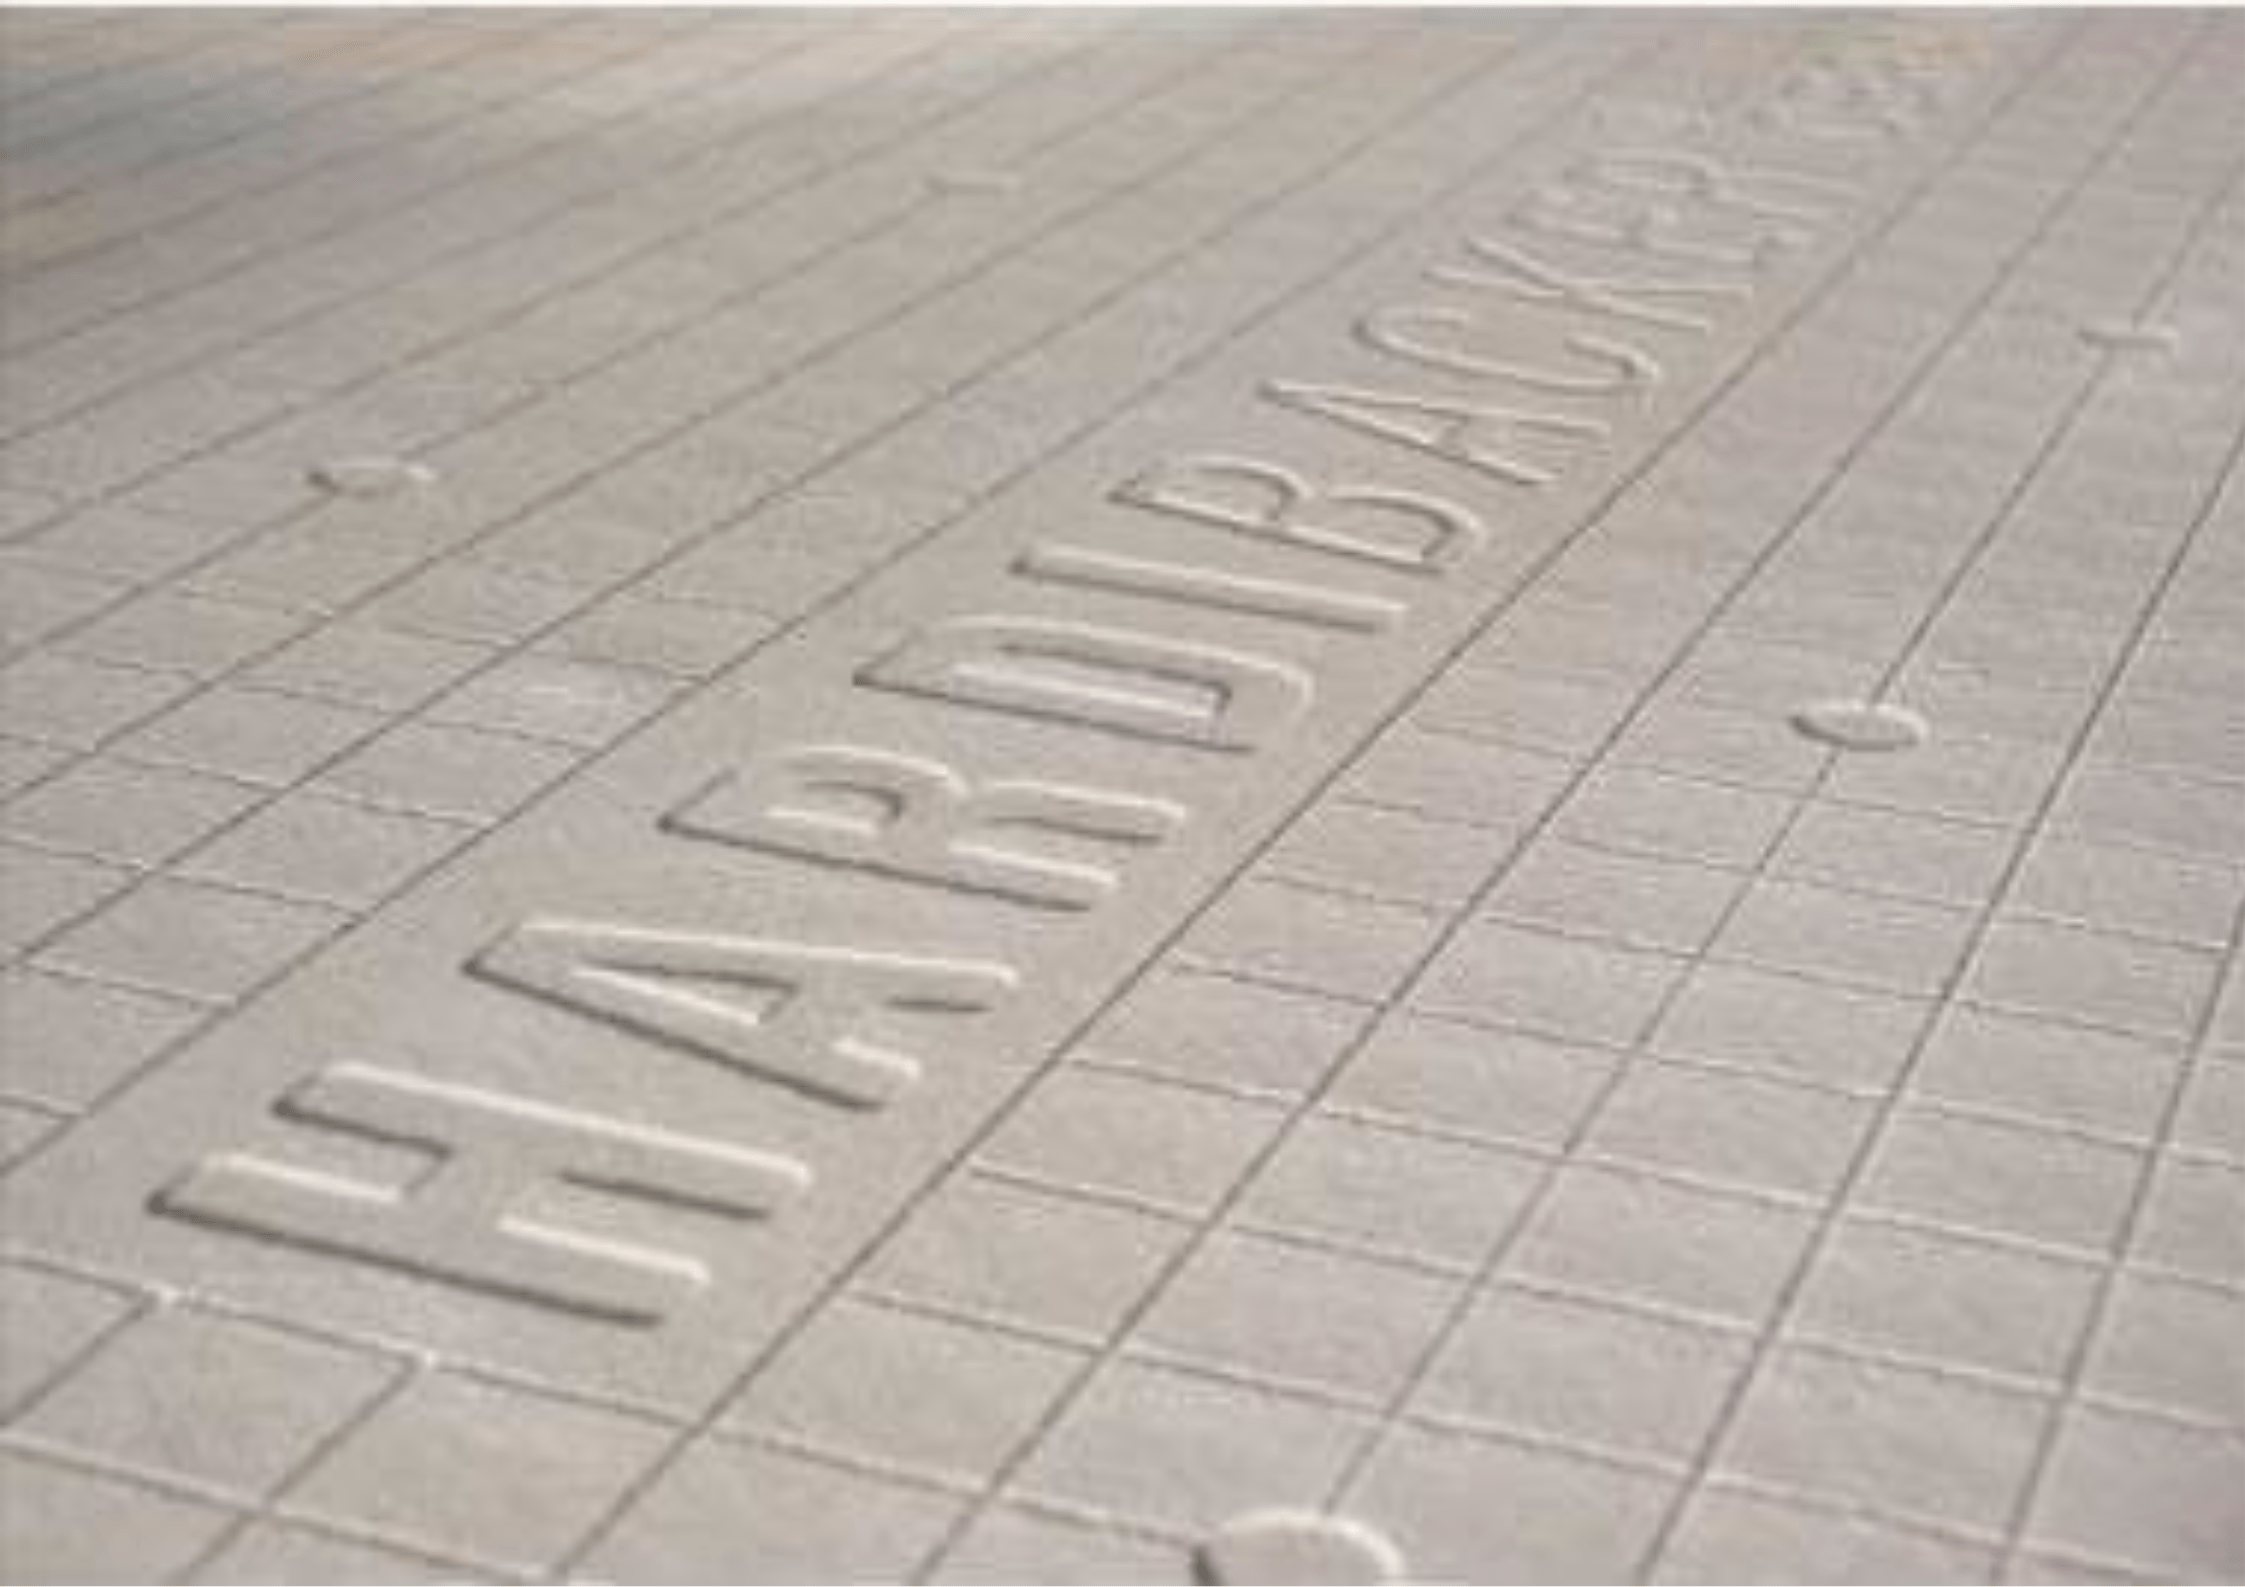 James Hardie Hardie® Backer Tile Backerboard 1200mm x 800mm x 6mm IUK01634 Hardie® Backer Tile Backerboard 1200mm x 800mm x 6mm | insulationuk.co.uk